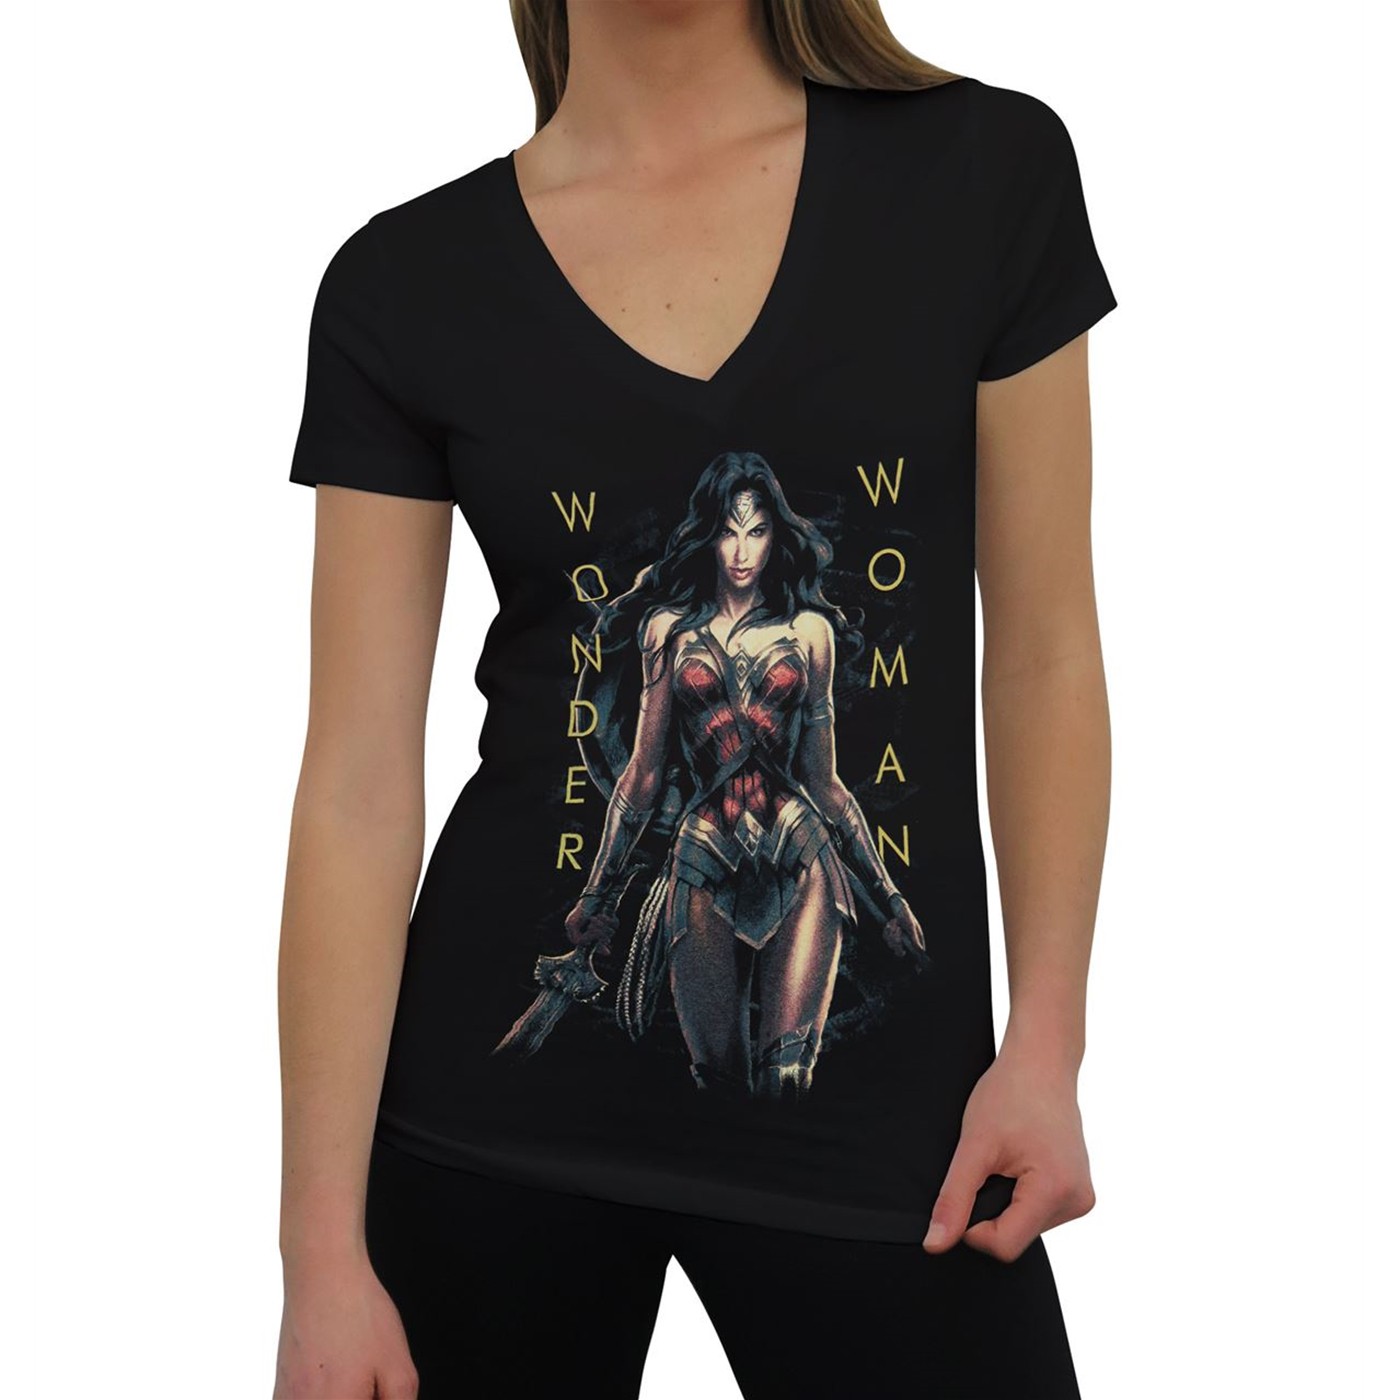 Wonder Woman Armed Amazon Women's V-Neck T-Shirt